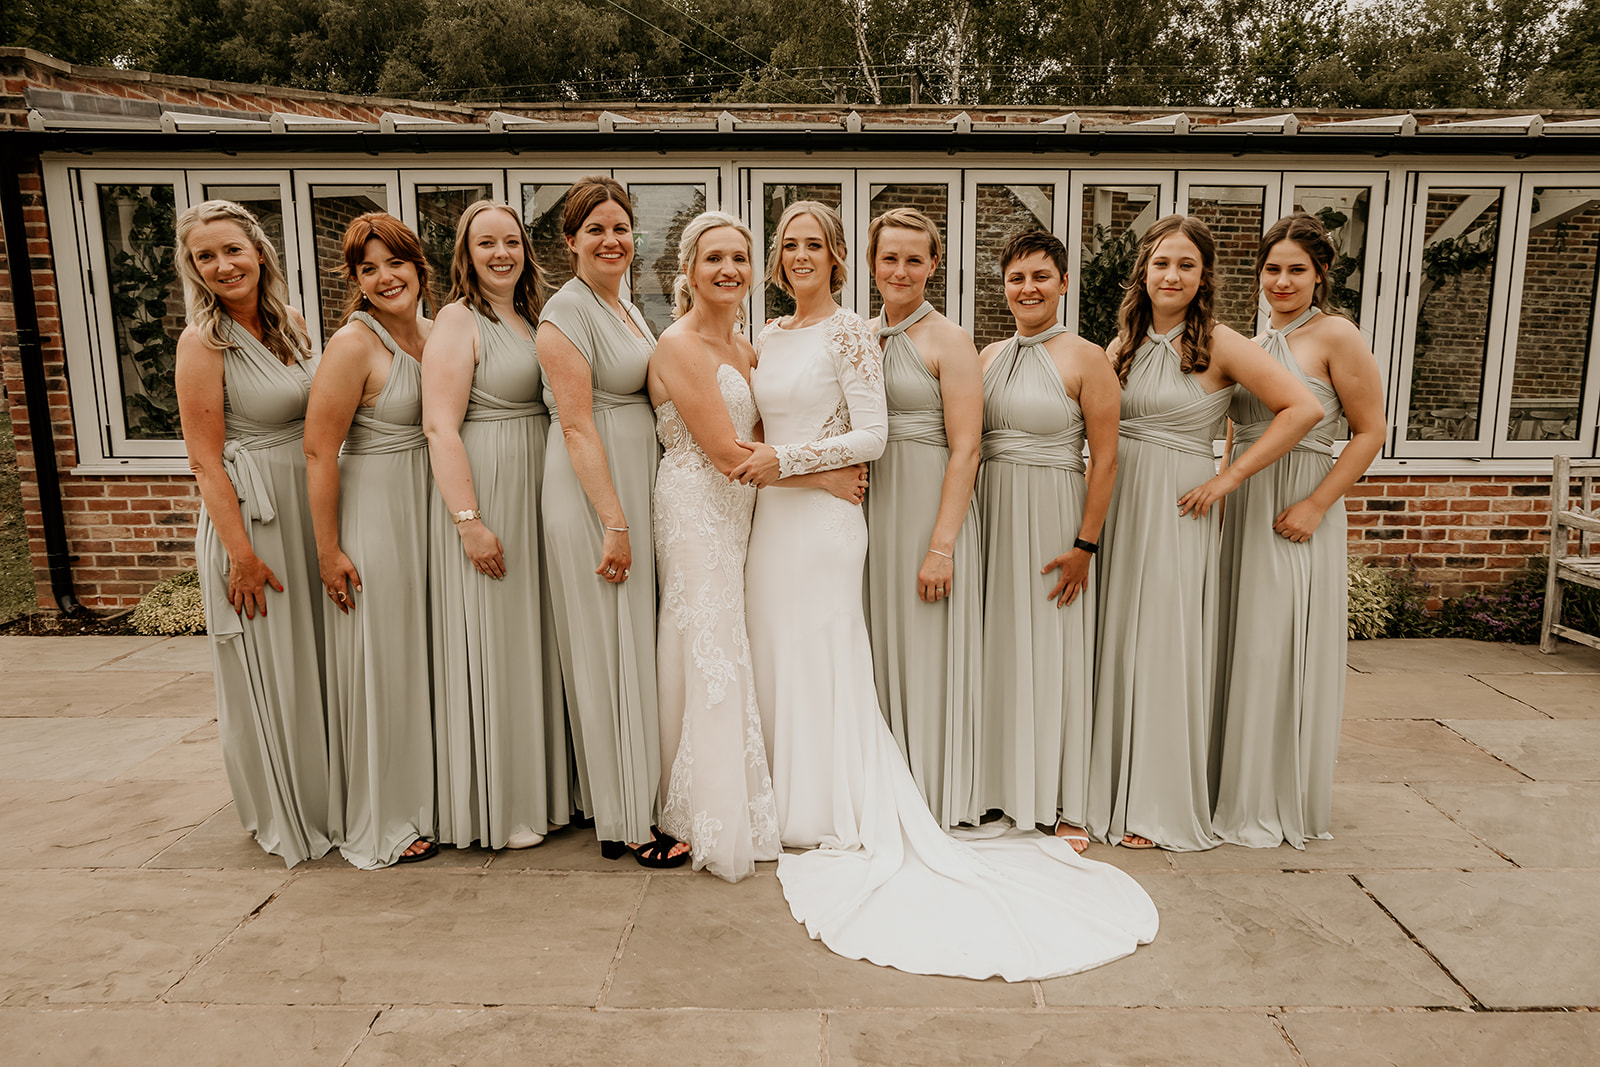 brides and bridesmaids at foxtails barn wedding venue